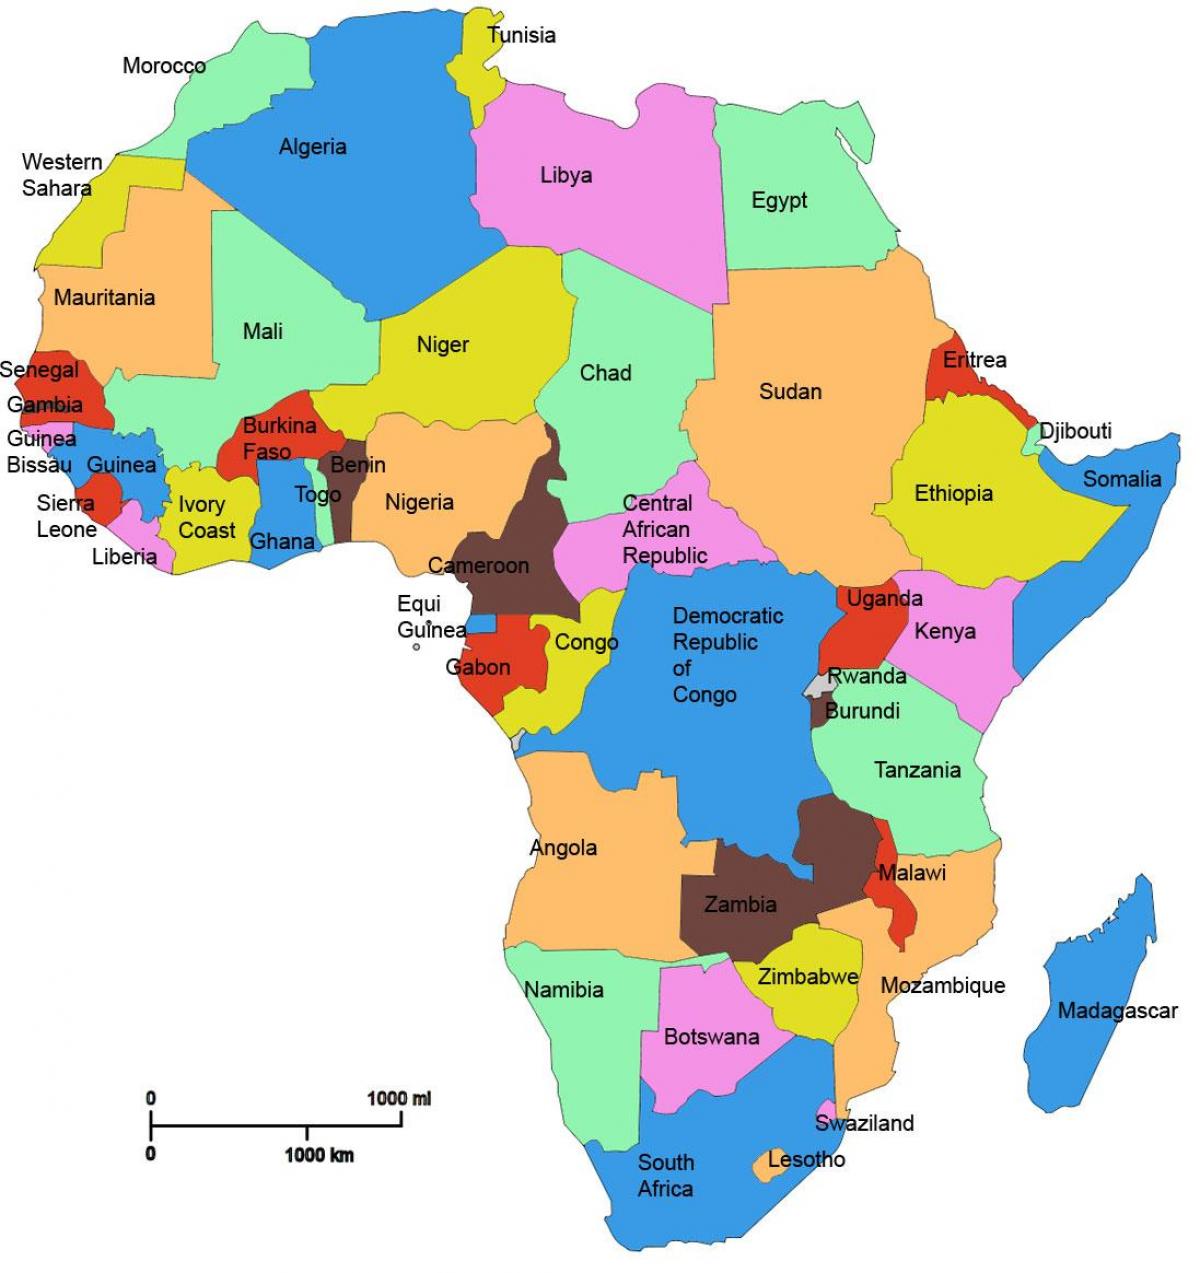 mapa afrikan erakutsiz tanzania